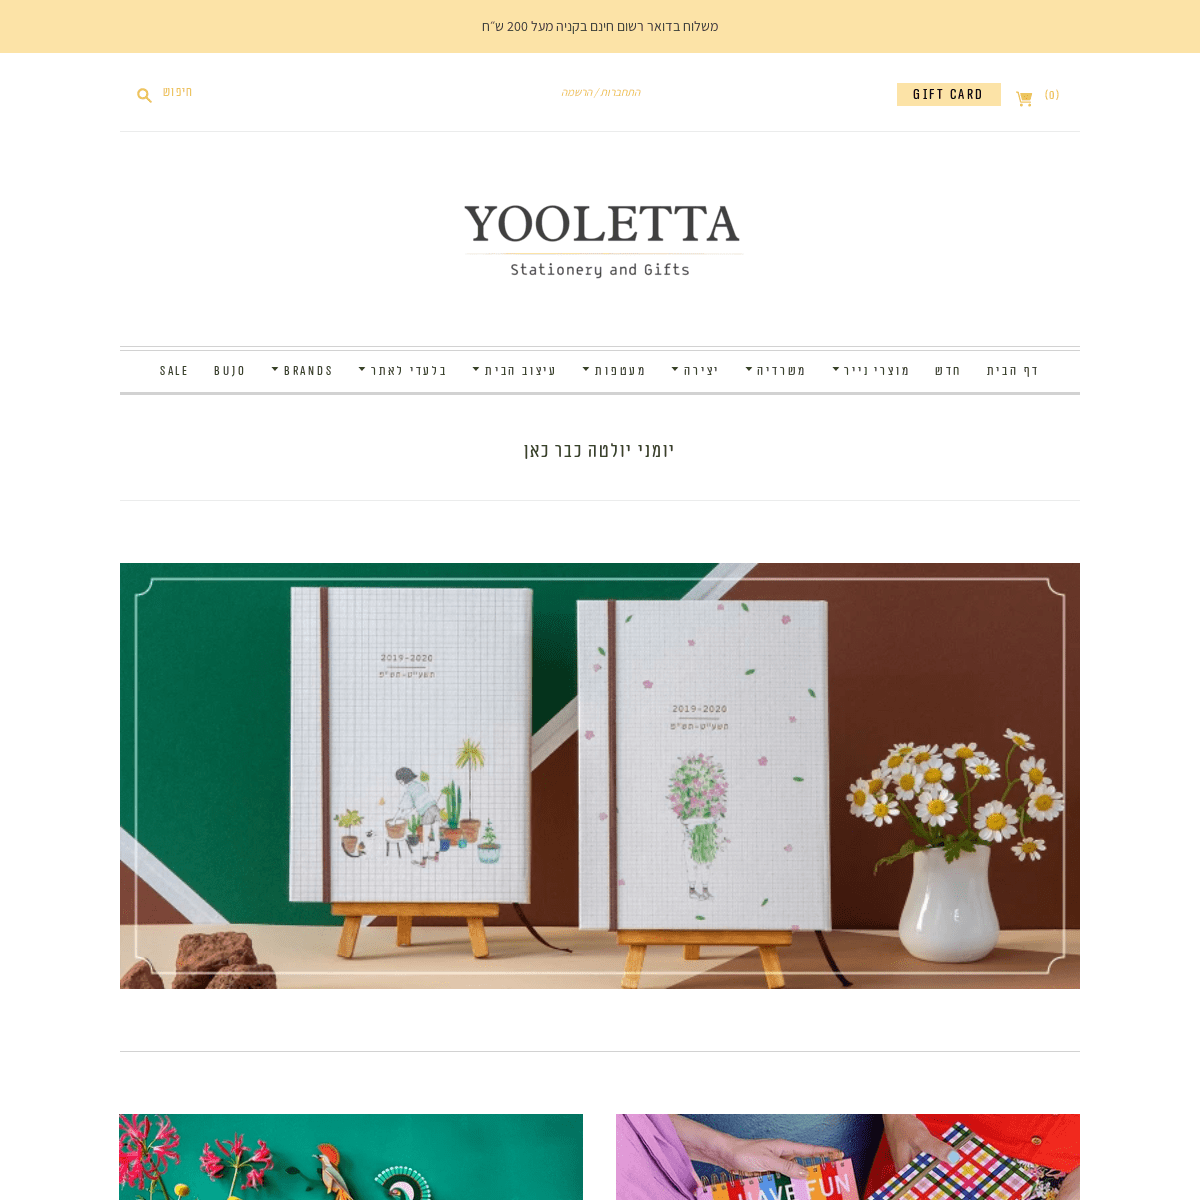 A complete backup of yooletta.com